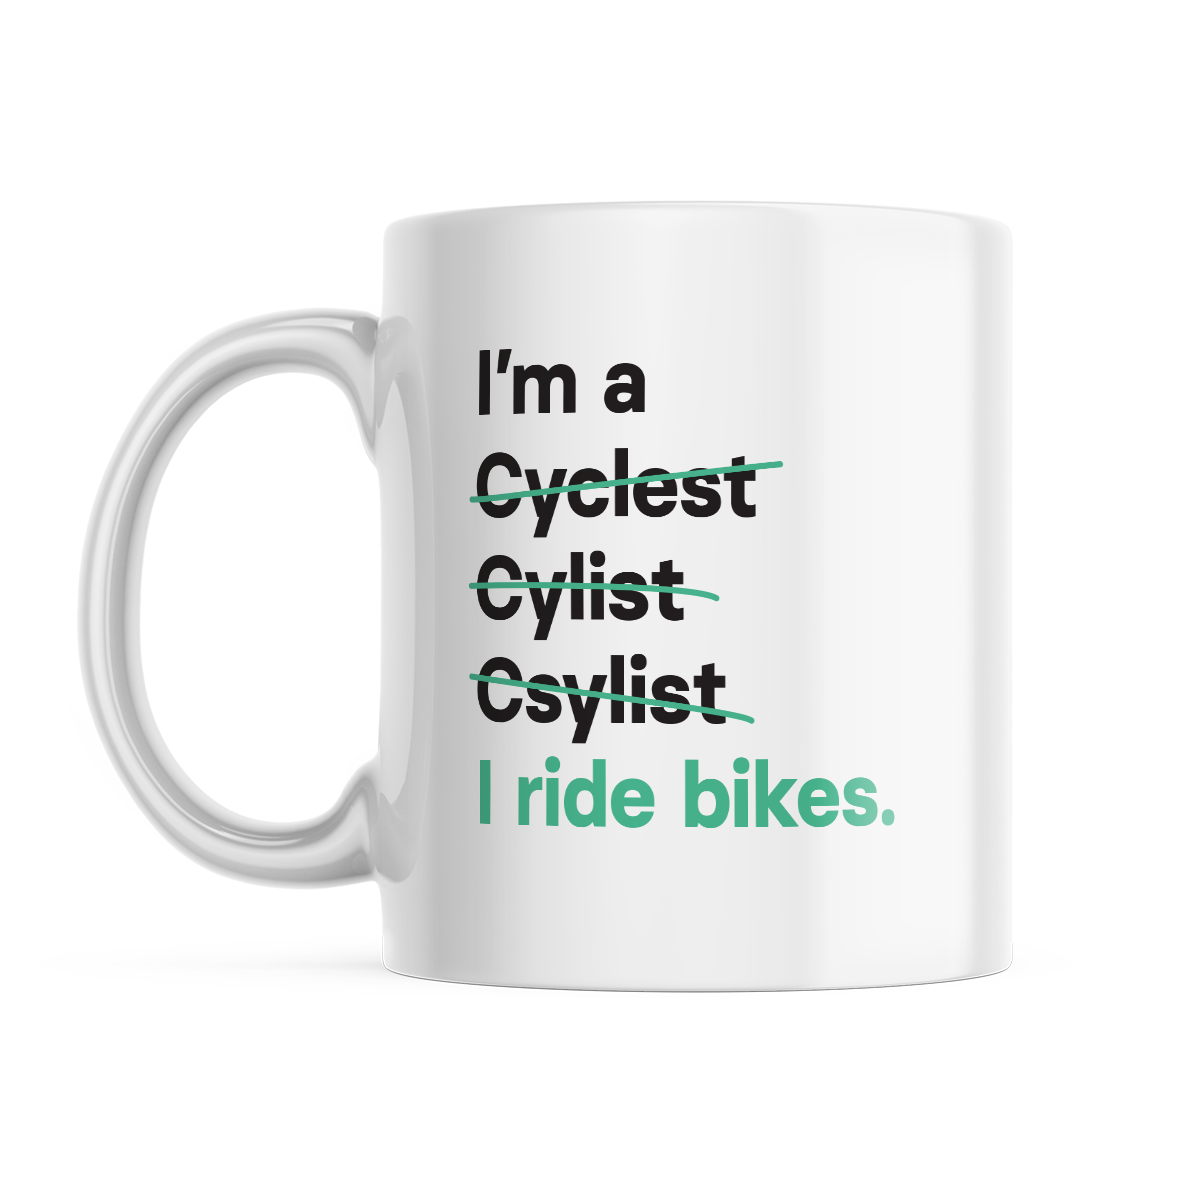 I'm a Cyclist